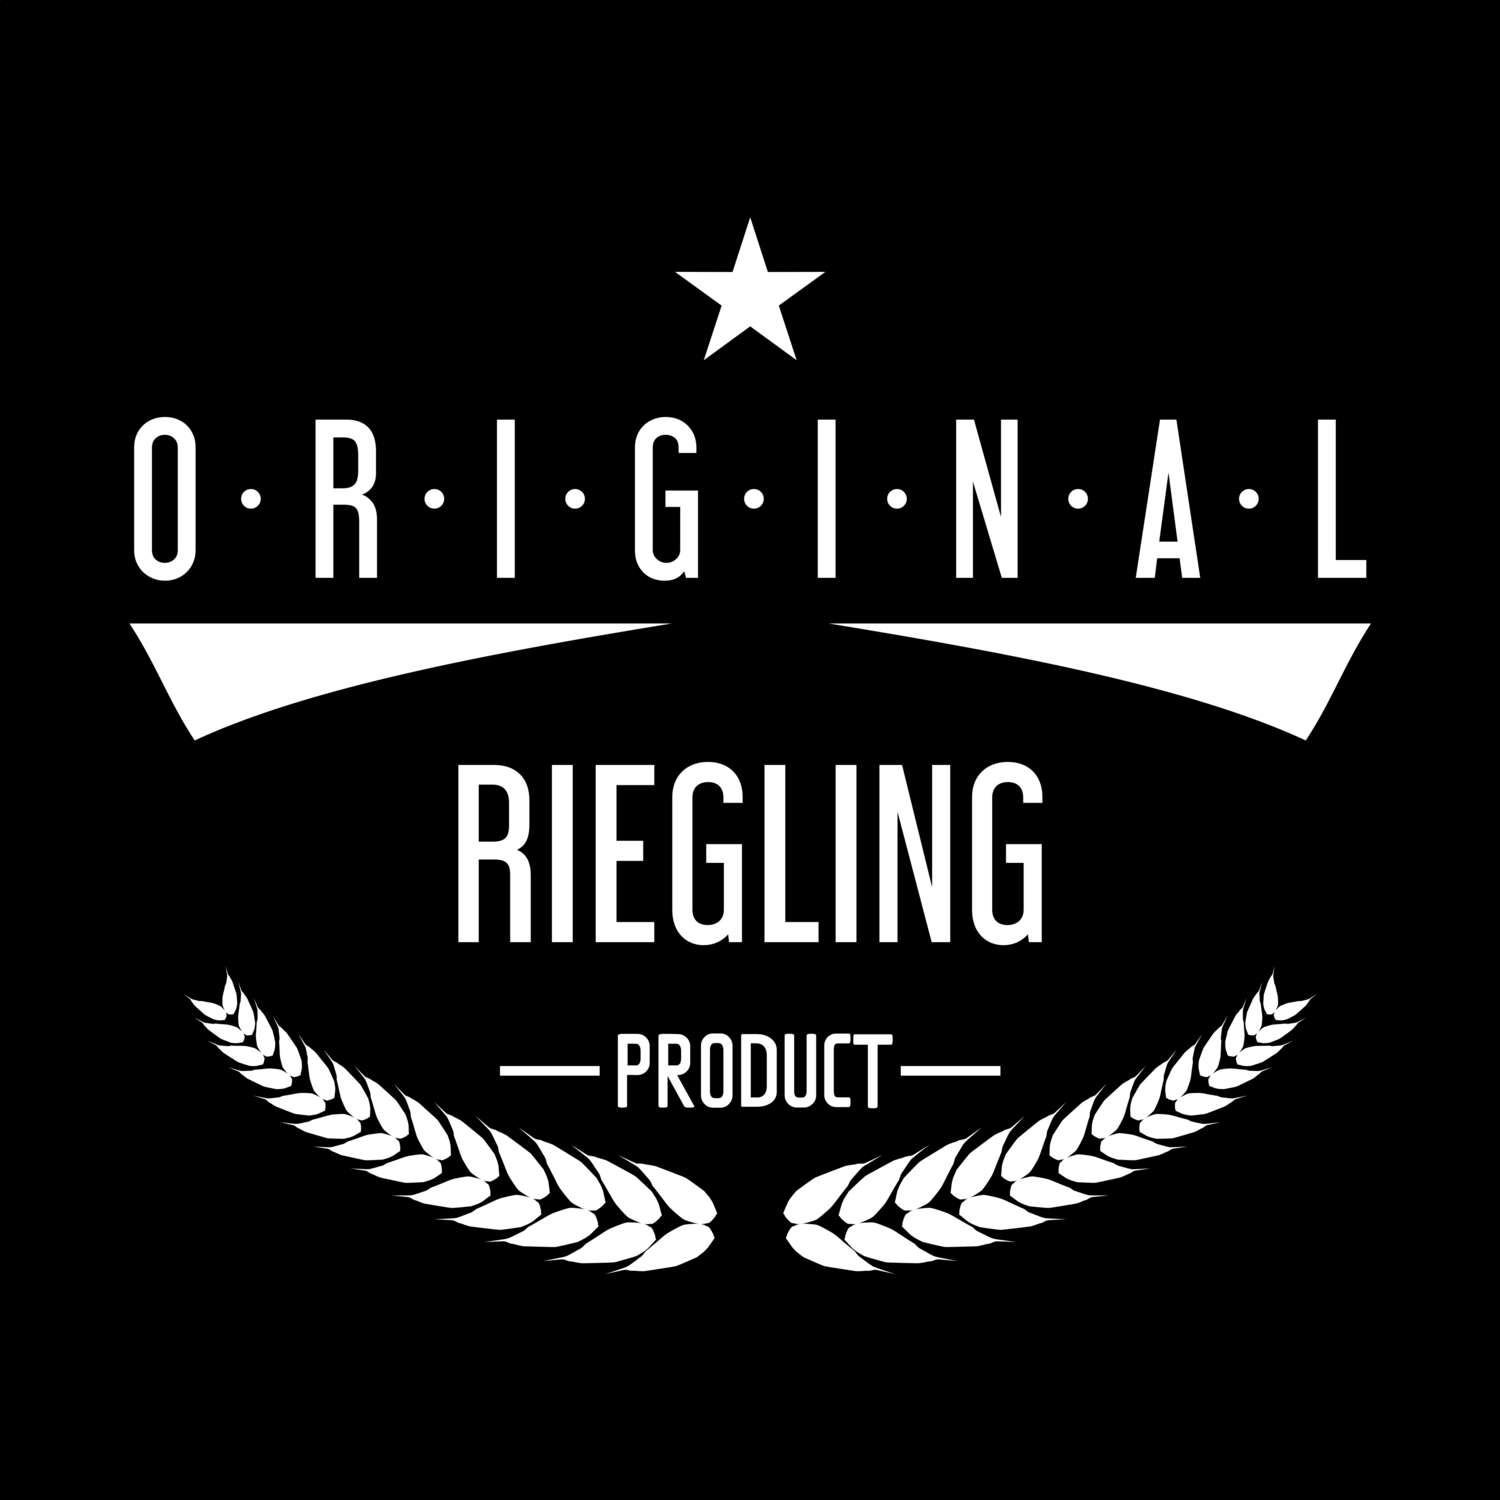 Riegling T-Shirt »Original Product«